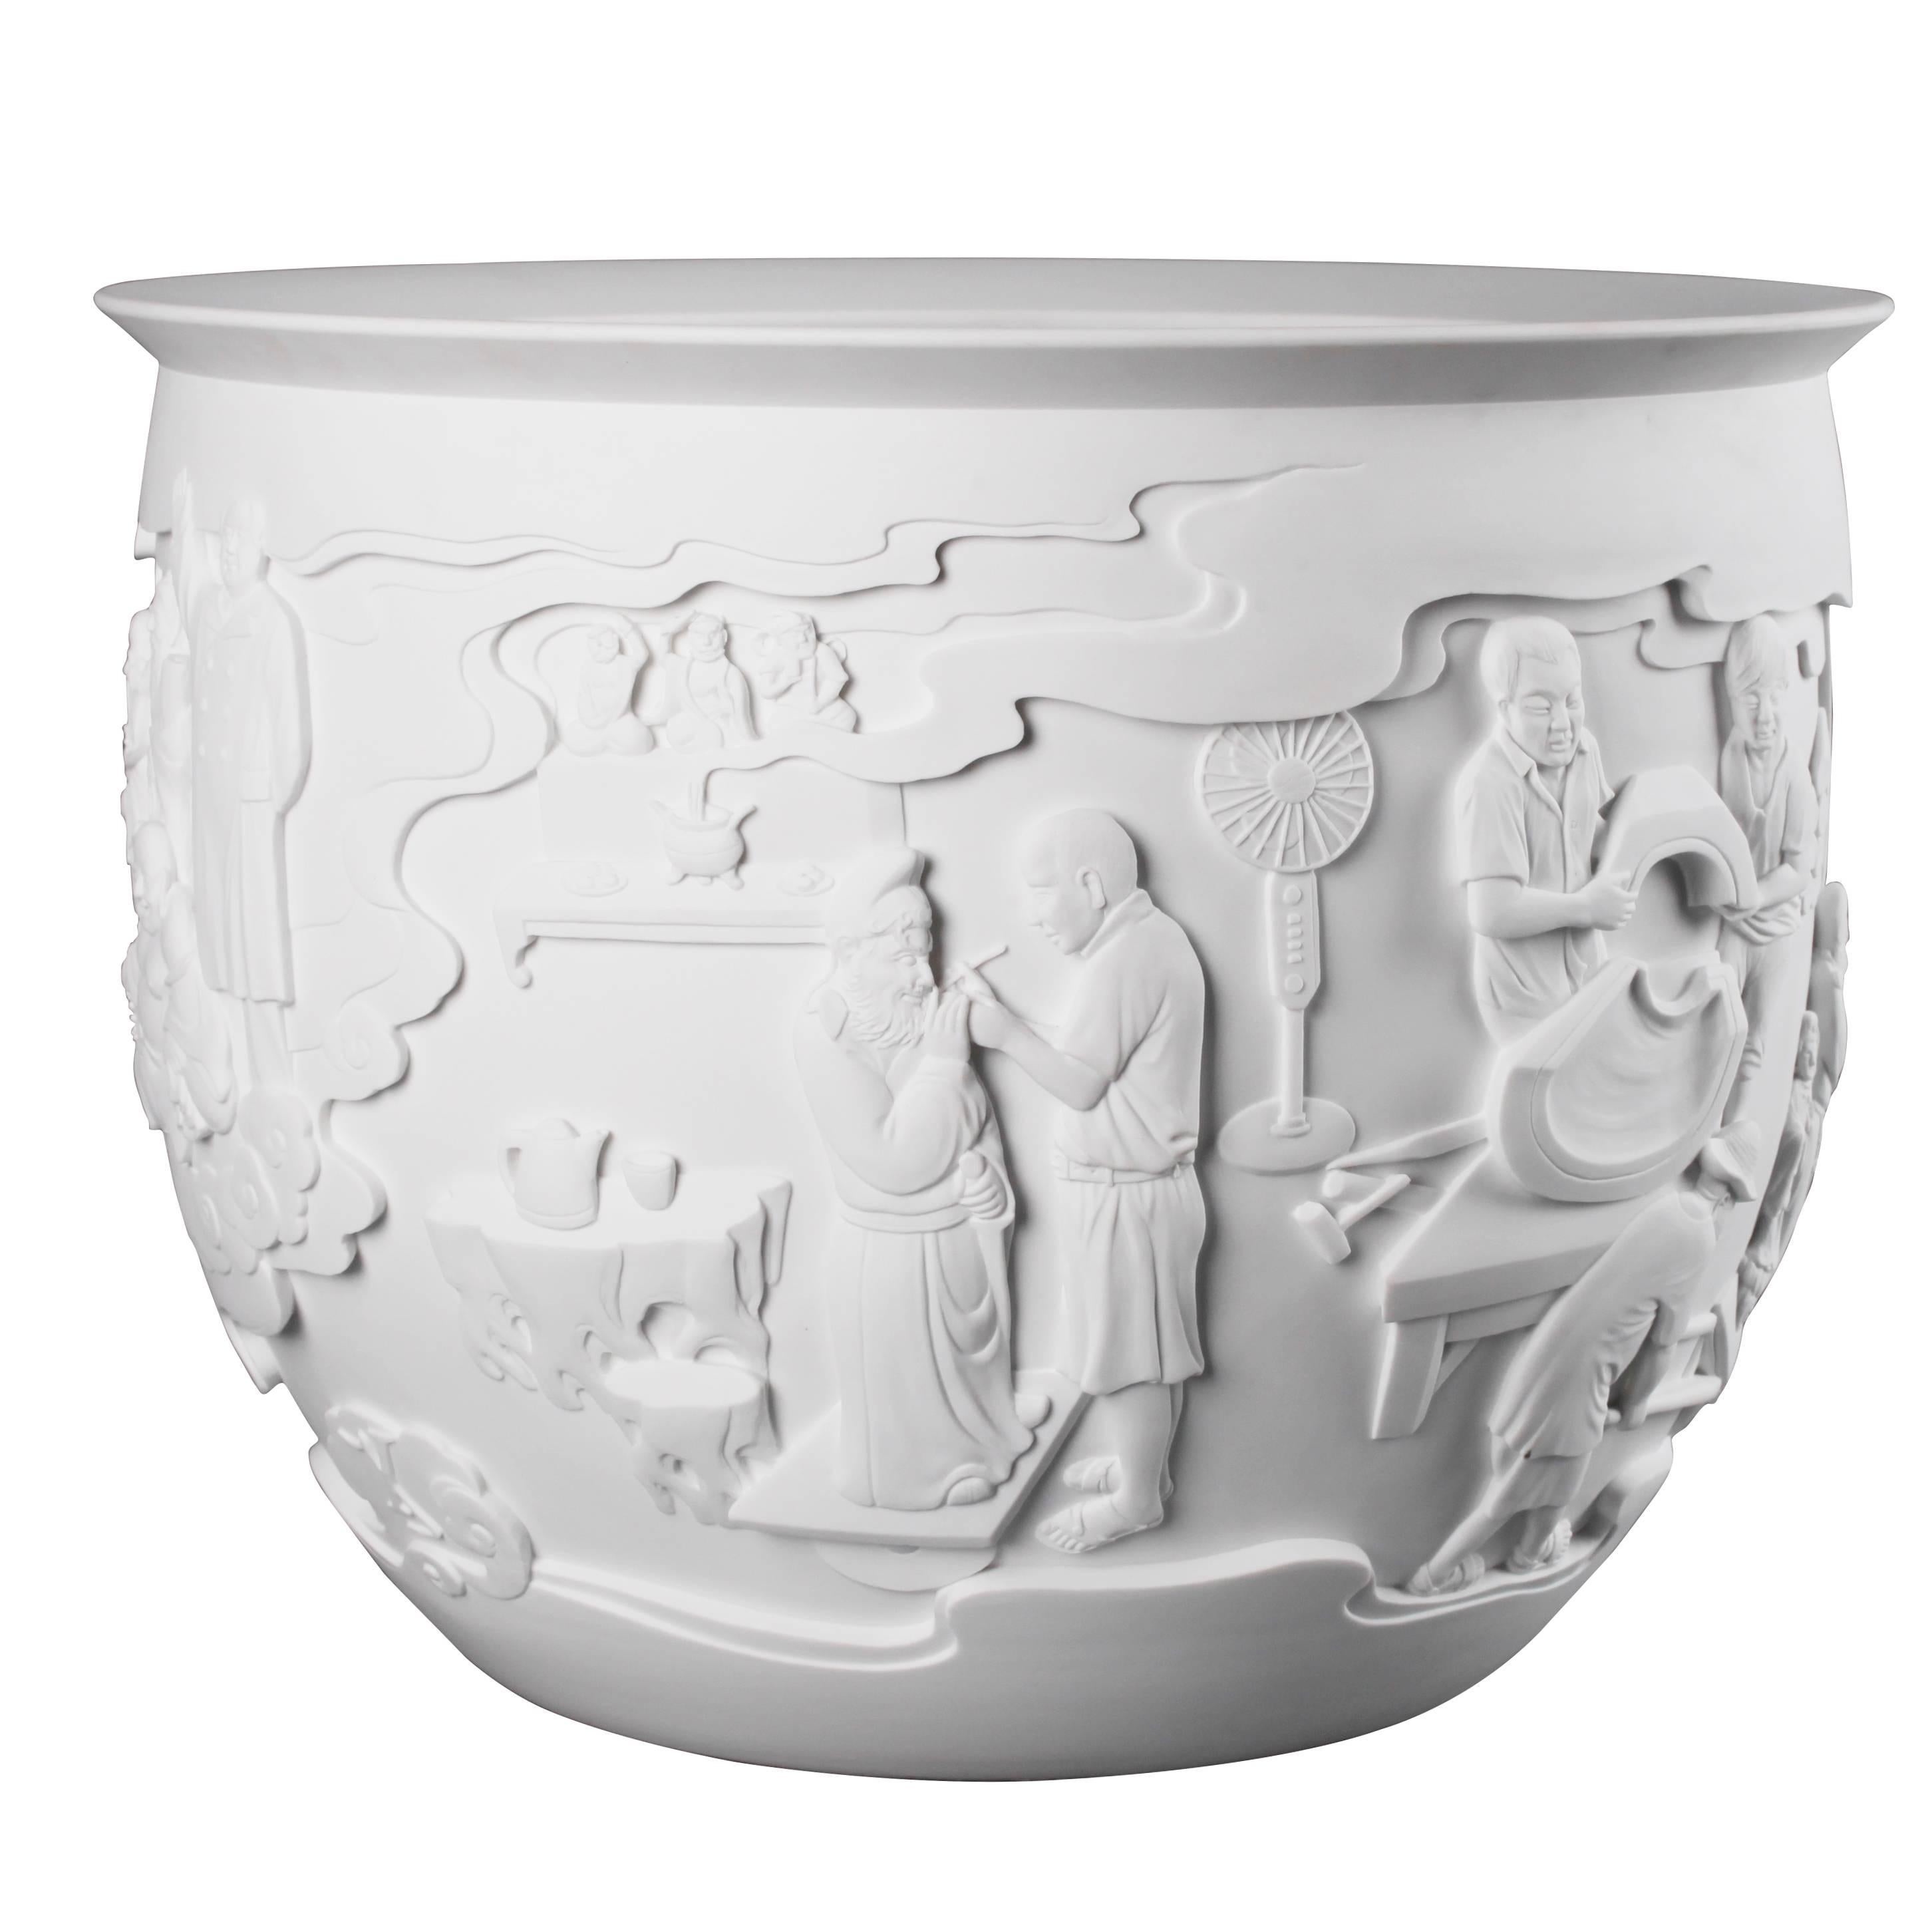 "Our Gods" White Porcelain Large Pot  Imitation Series by Zhenhan Hao